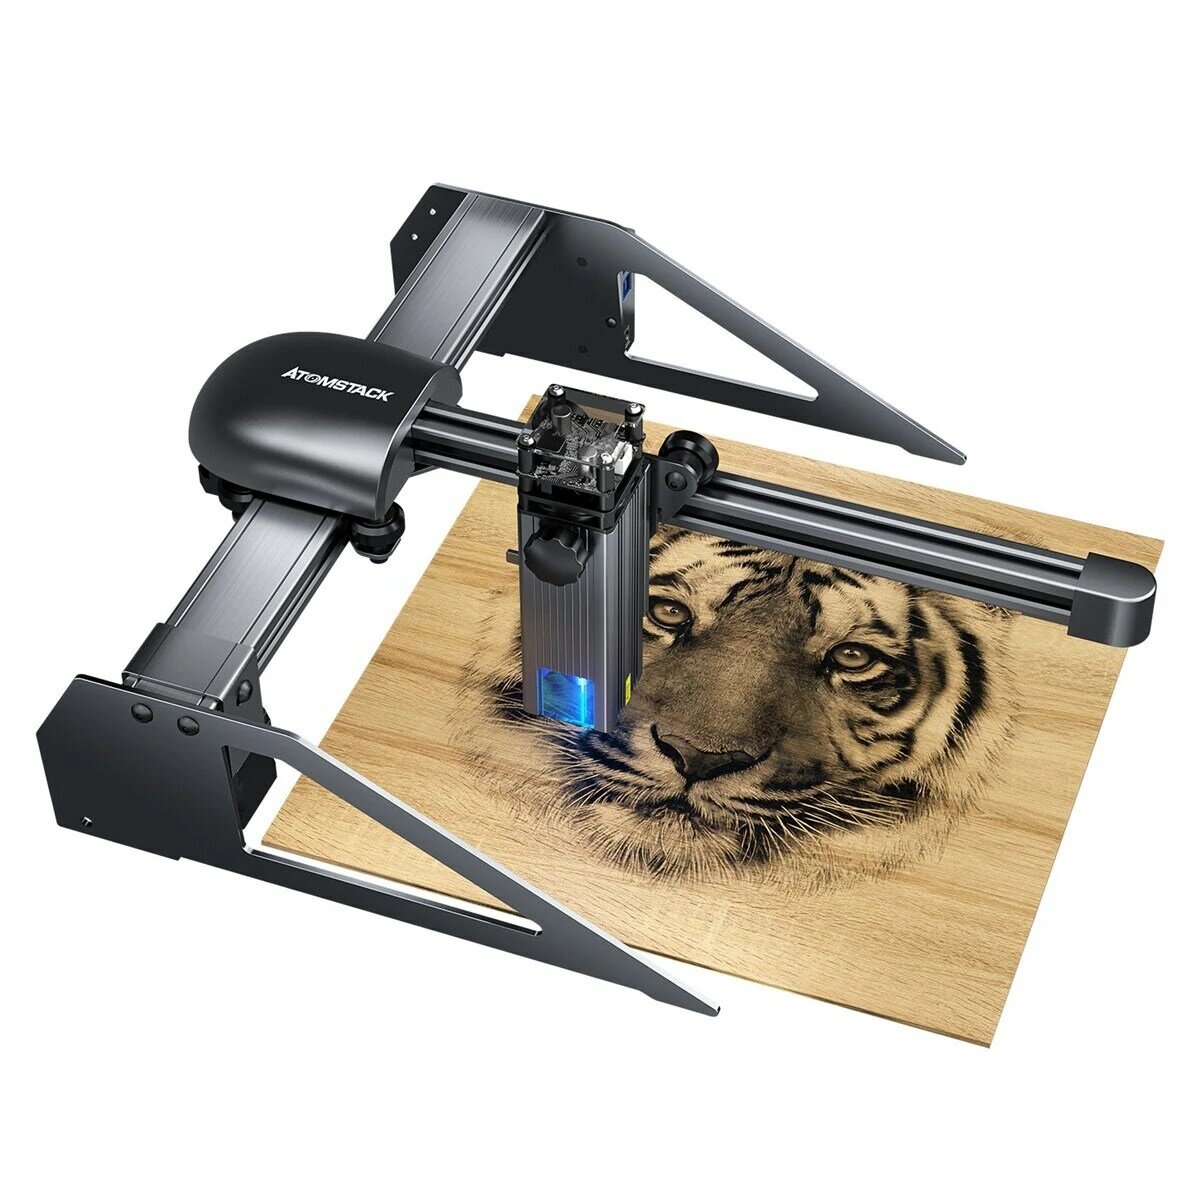 Image of [EU DIRECT] New ATOMSTACK P7 M40 Portable Laser Engraving Machine Cutter Wood Cutting Design Desktop DIY Laser Engraver